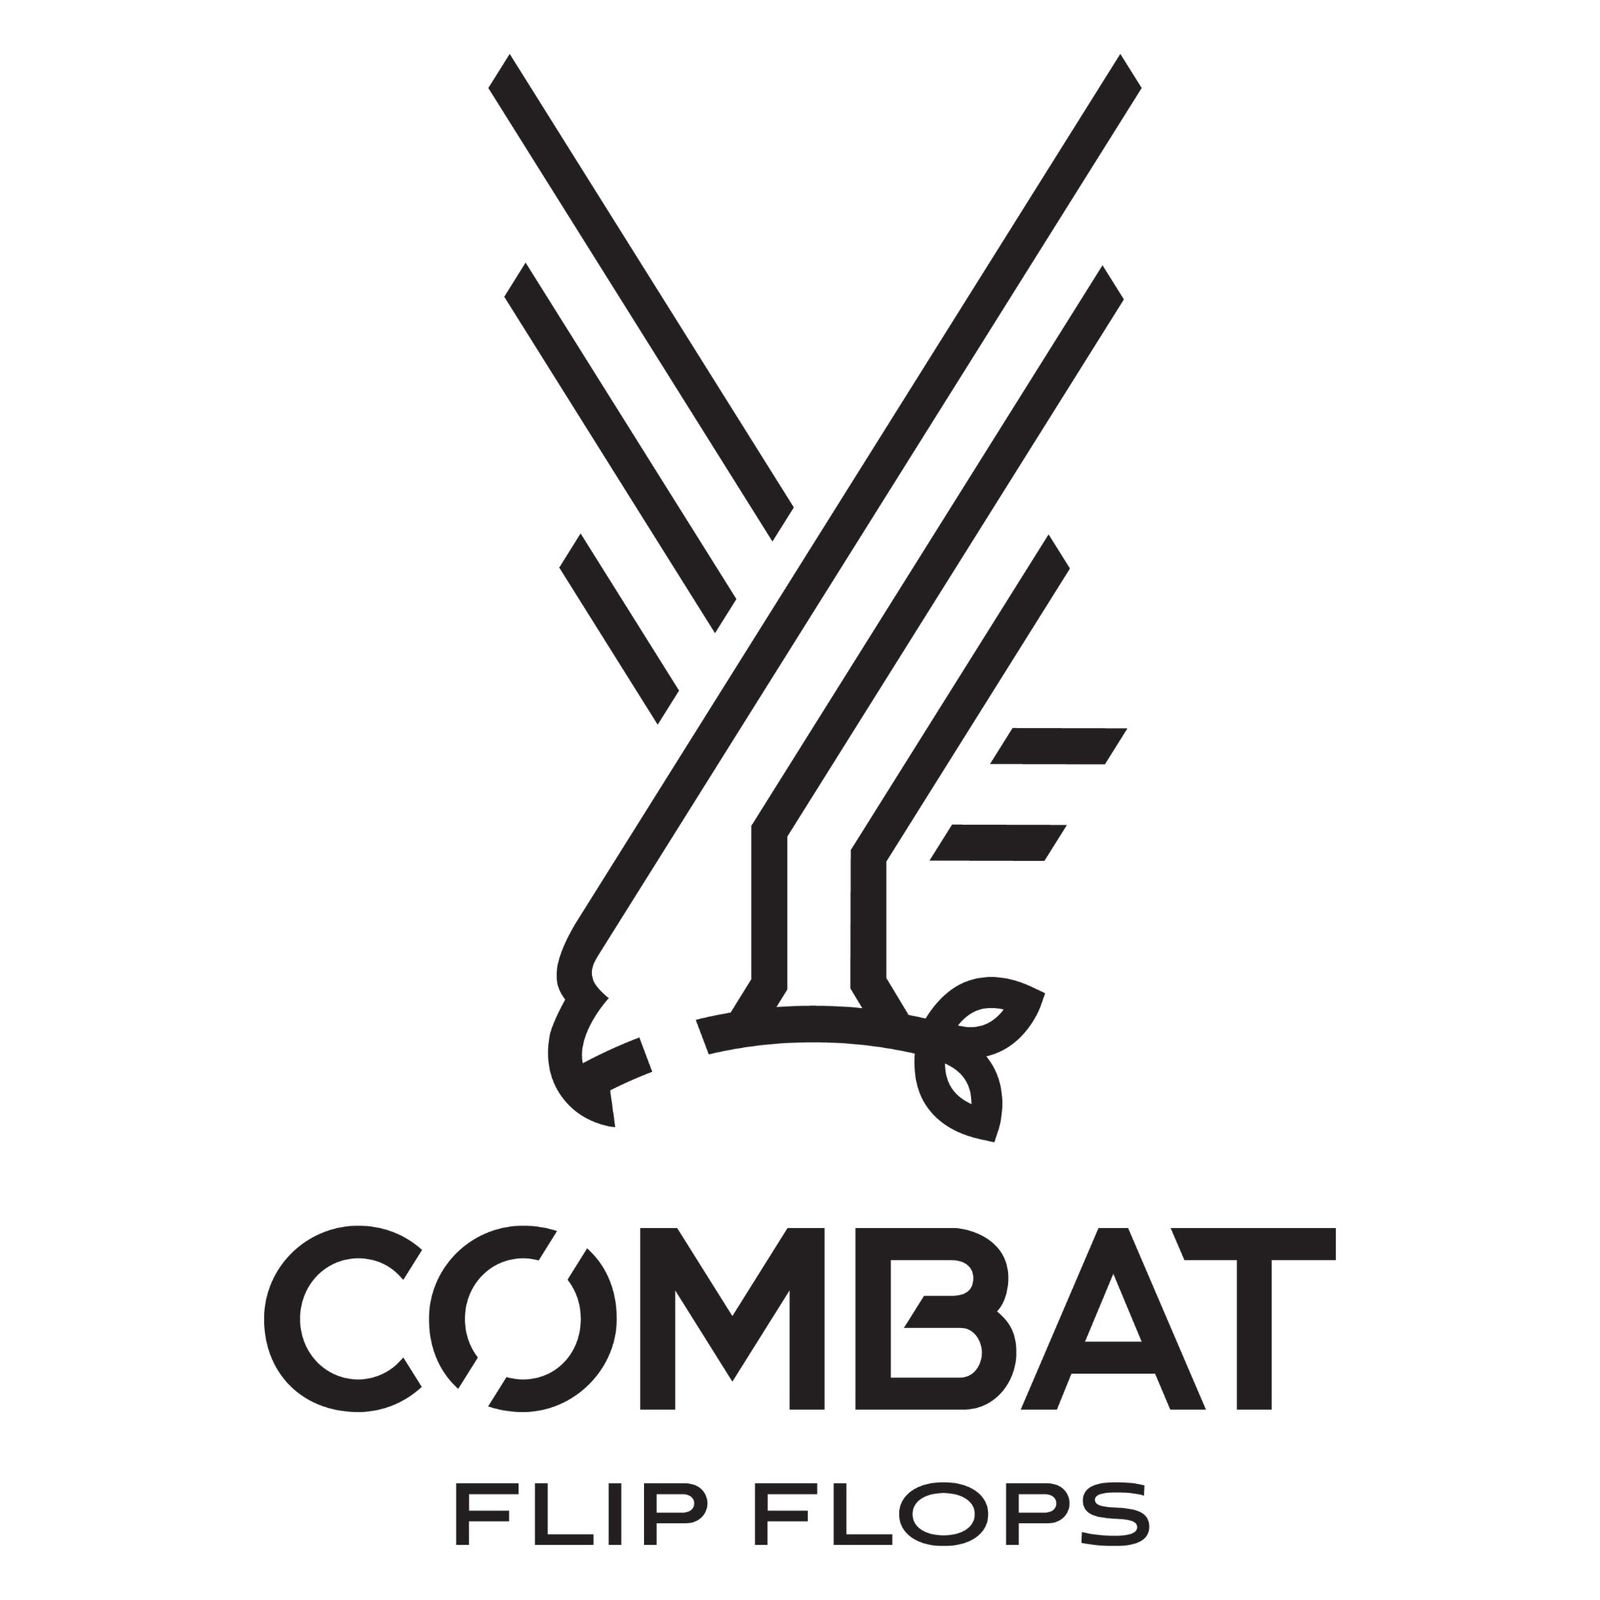 Combat Flip Flops - a Photographer from Issaquah, Washington, United States